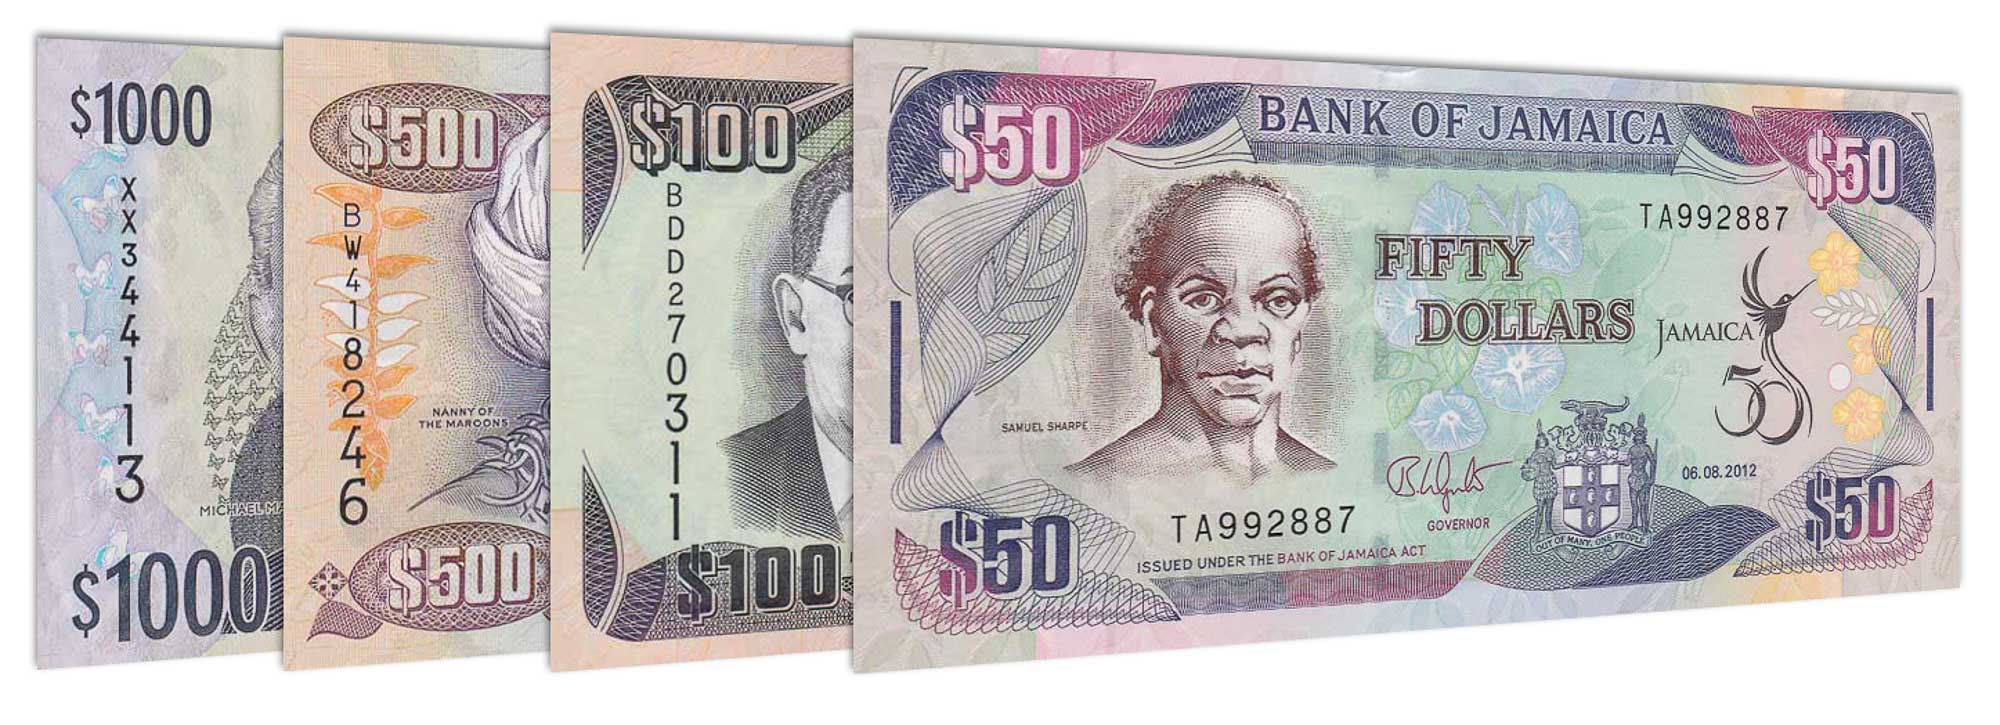 exchange-jamaican-dollars-in-3-easy-steps-leftover-currency